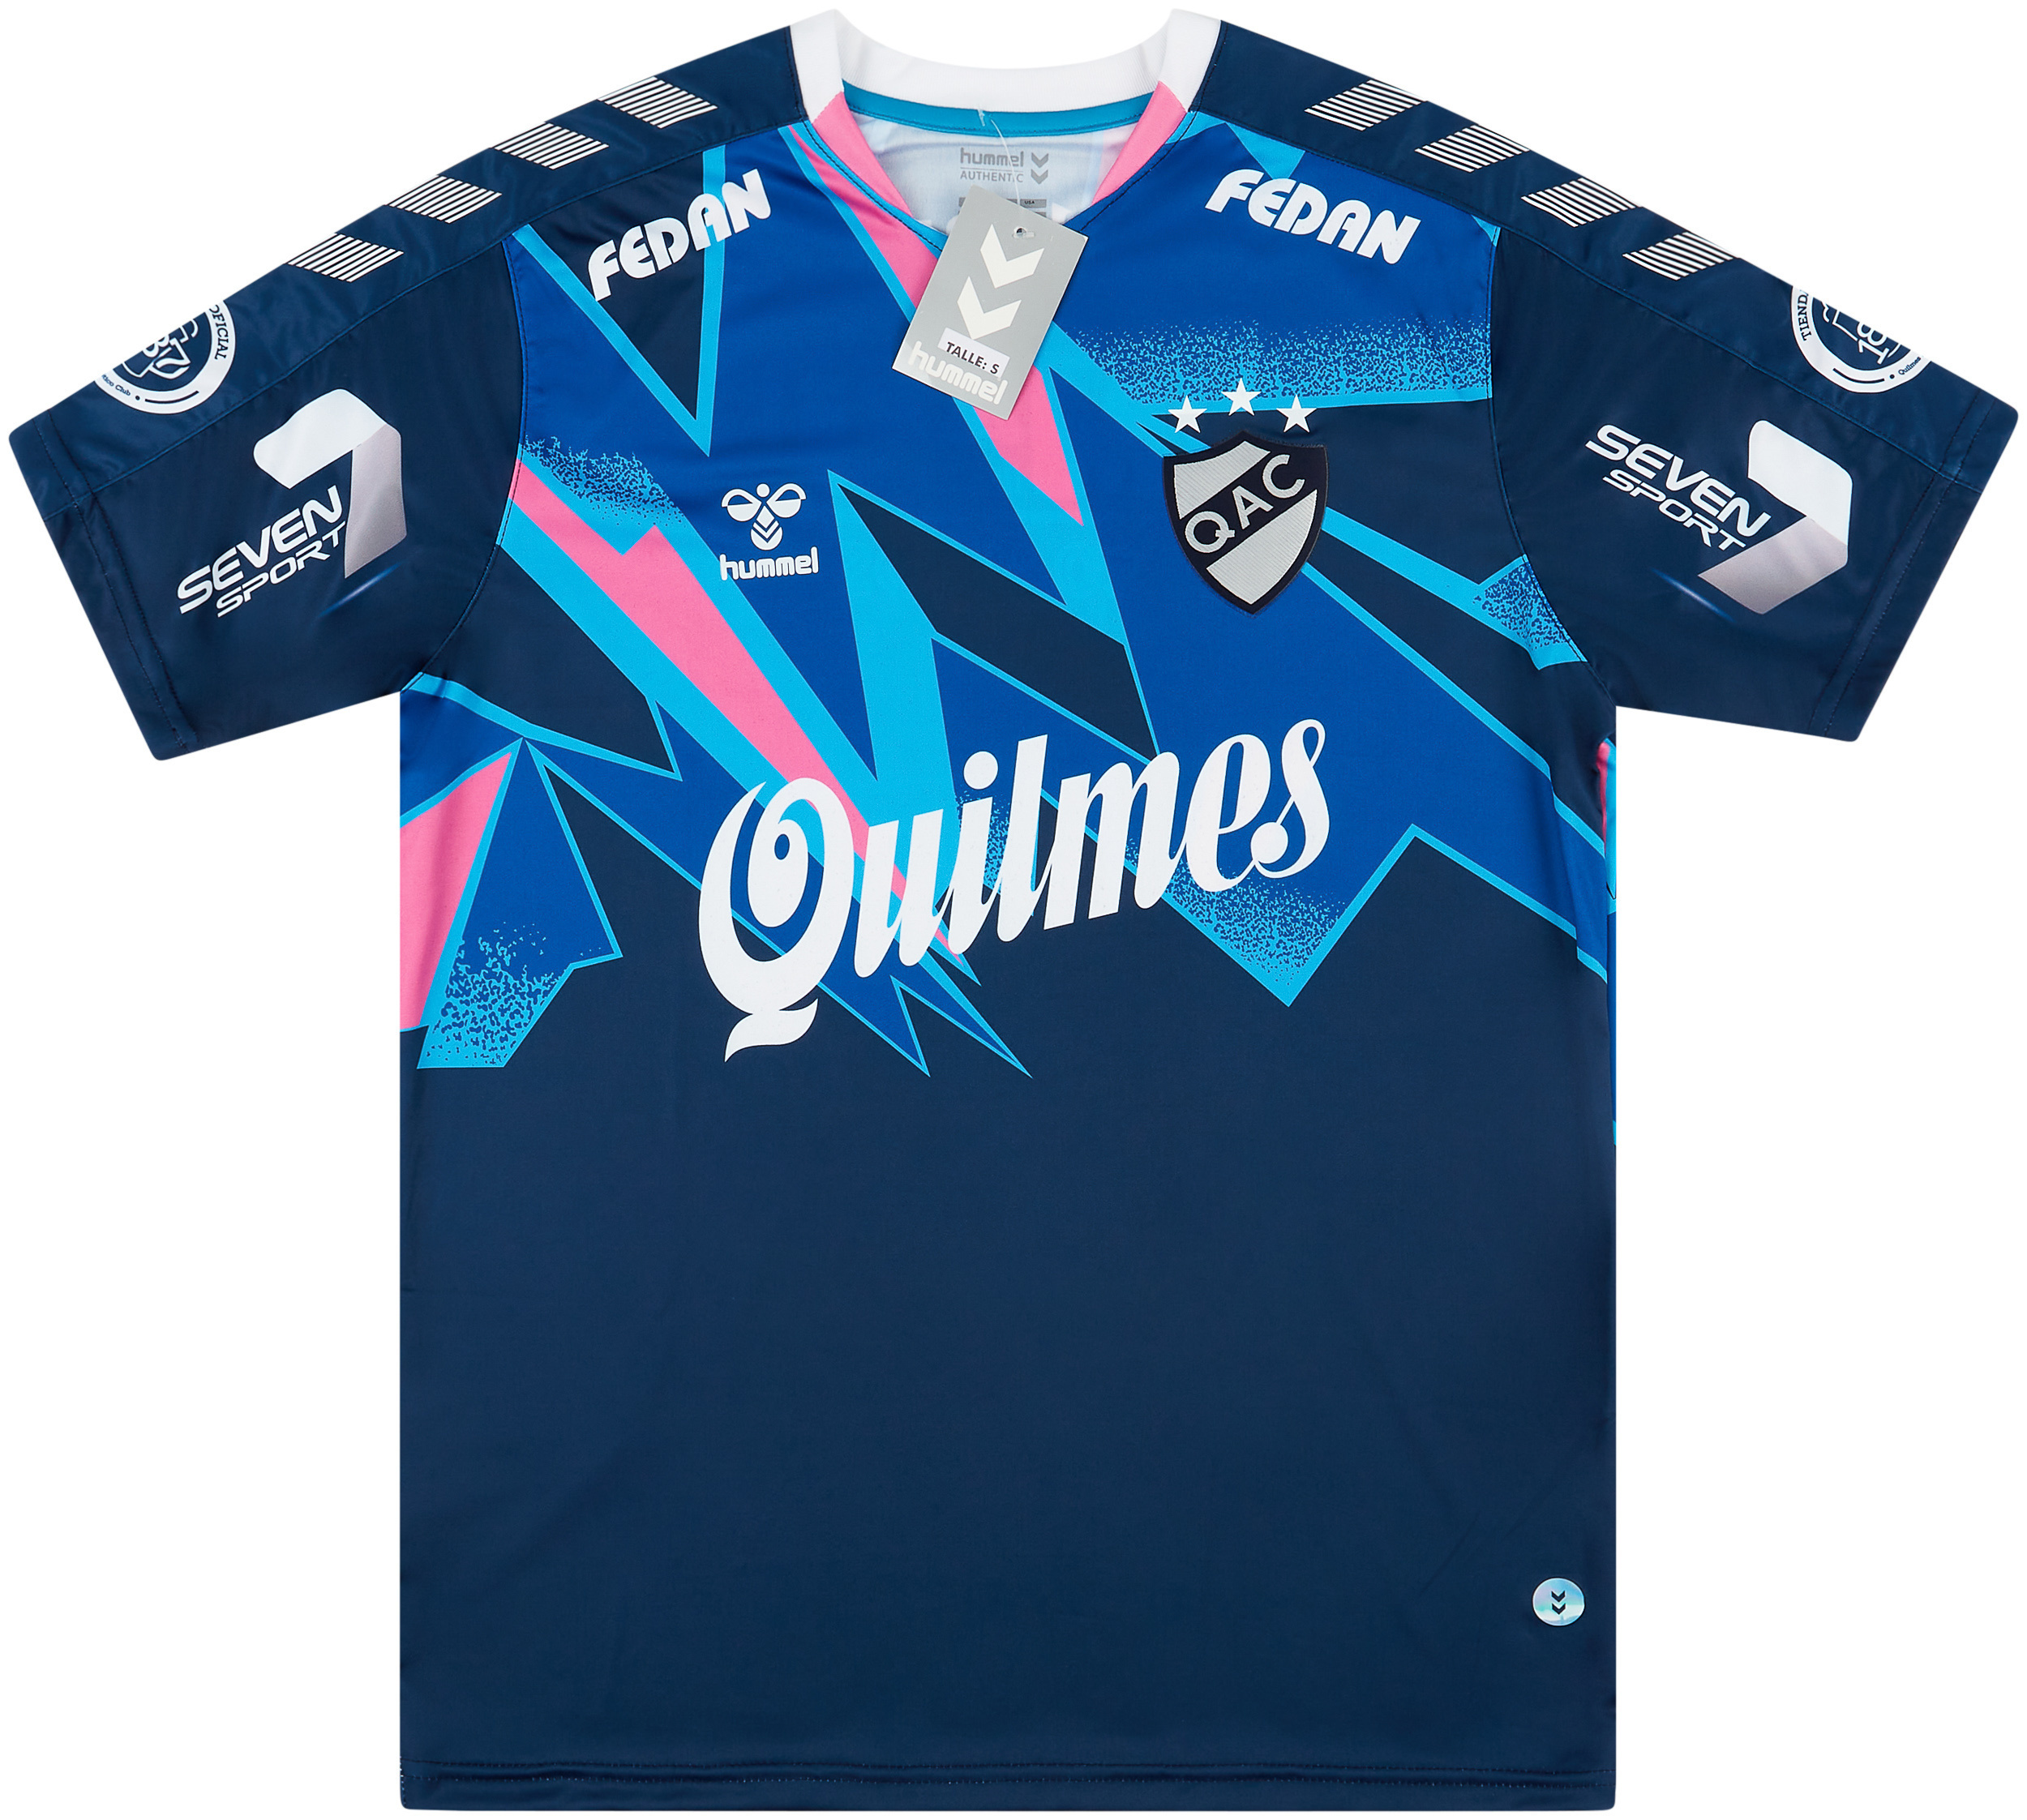 Quilmes  Away shirt (Original)